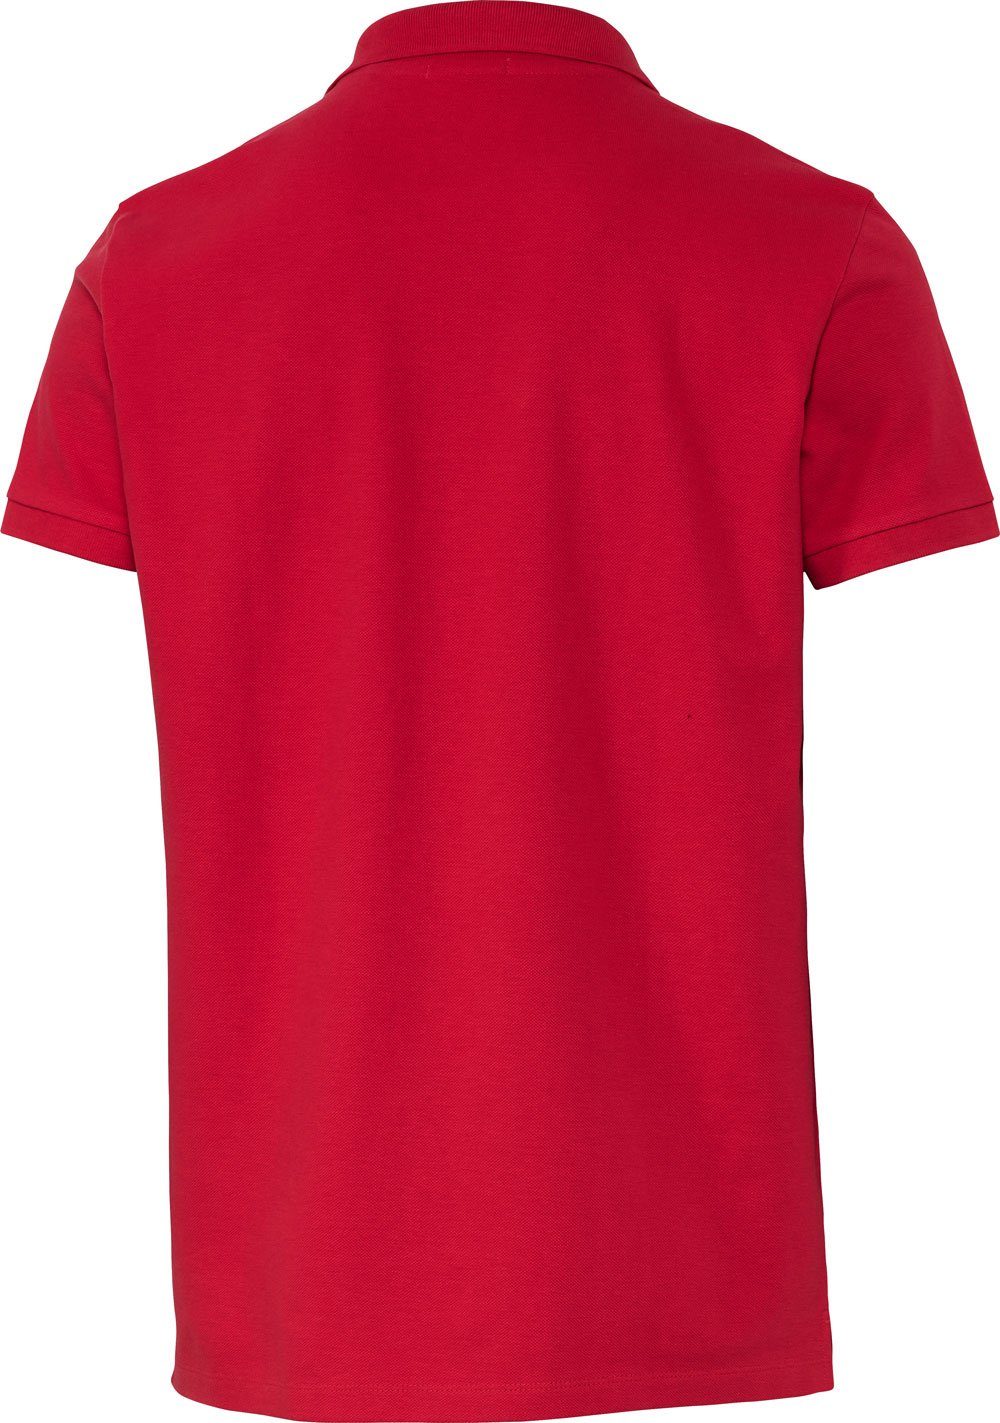 Chiemsee Poloshirt aus reinem Baumwoll-Piqué rot